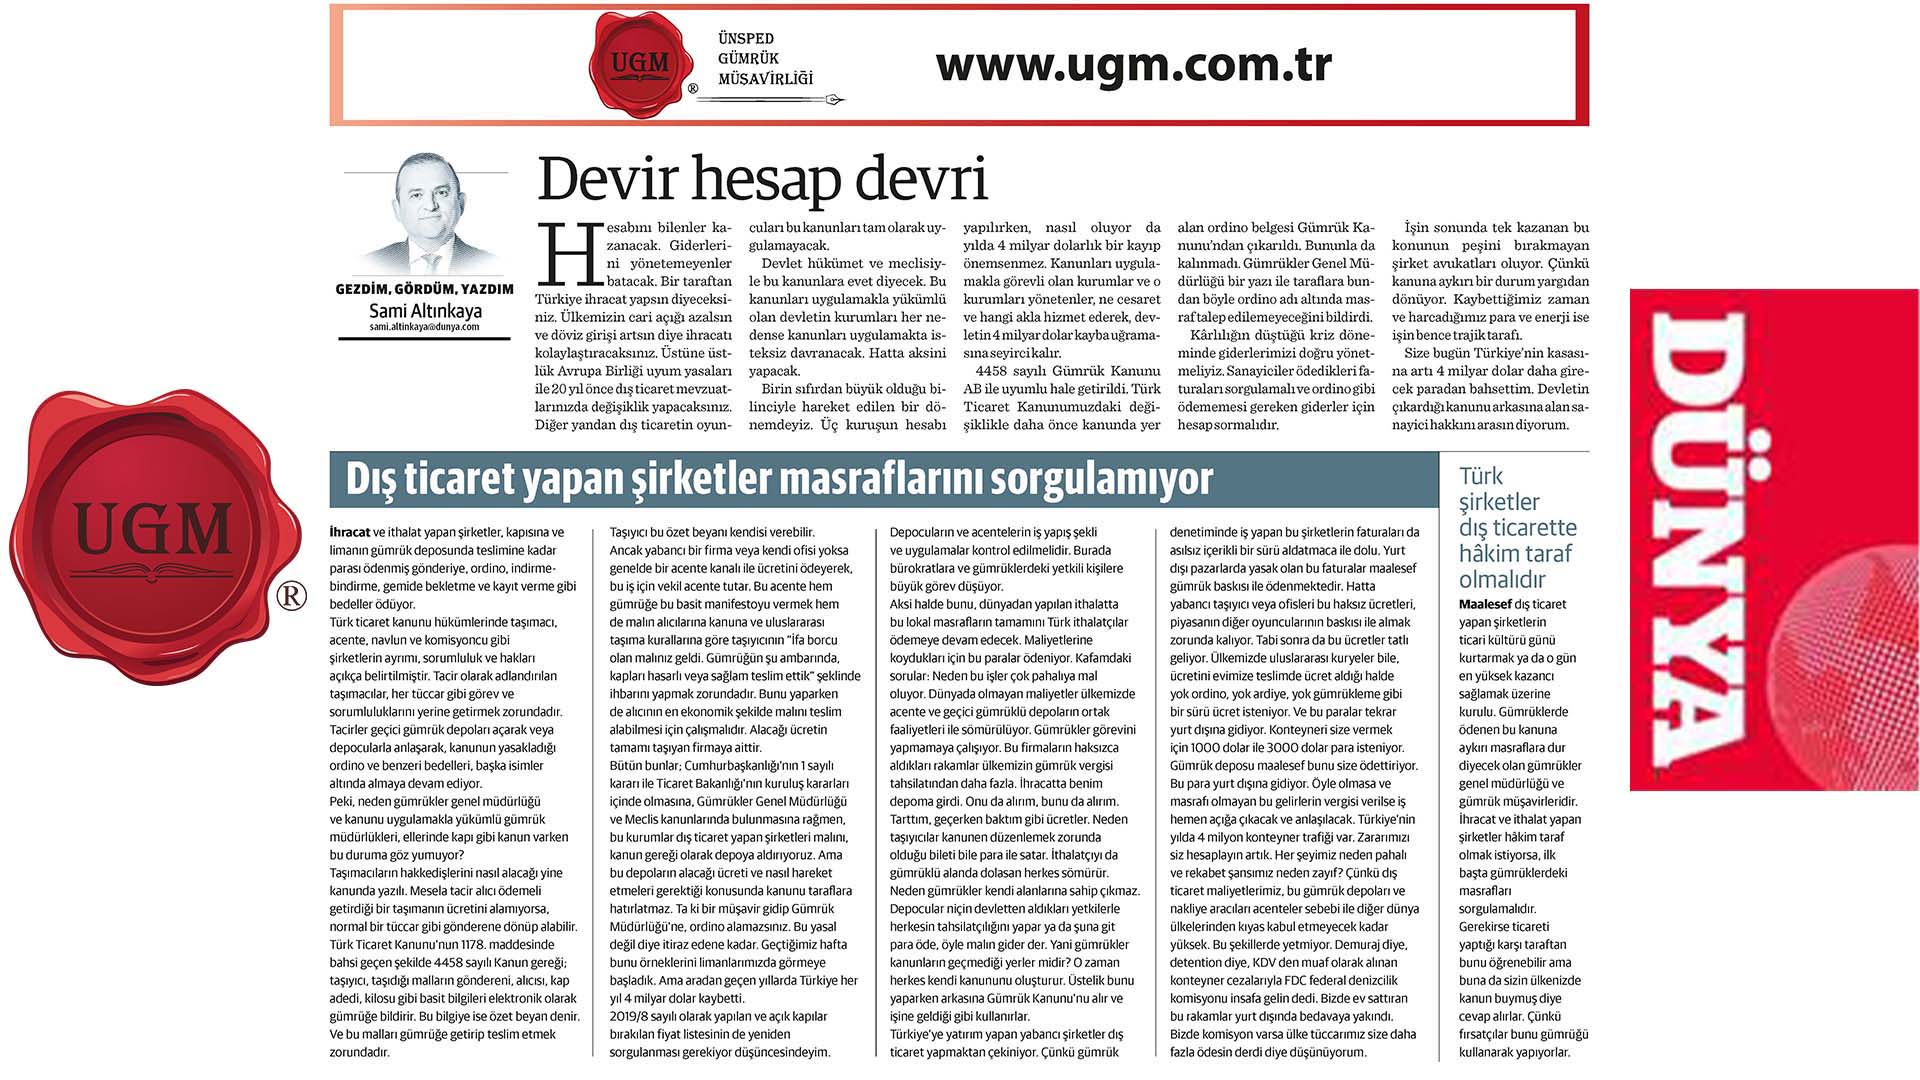 The article of Sami Altınkaya, UGM Corporate Communications Director, titled "This era is saving era" is published in Dünya Newspaper on 11.05.2020.